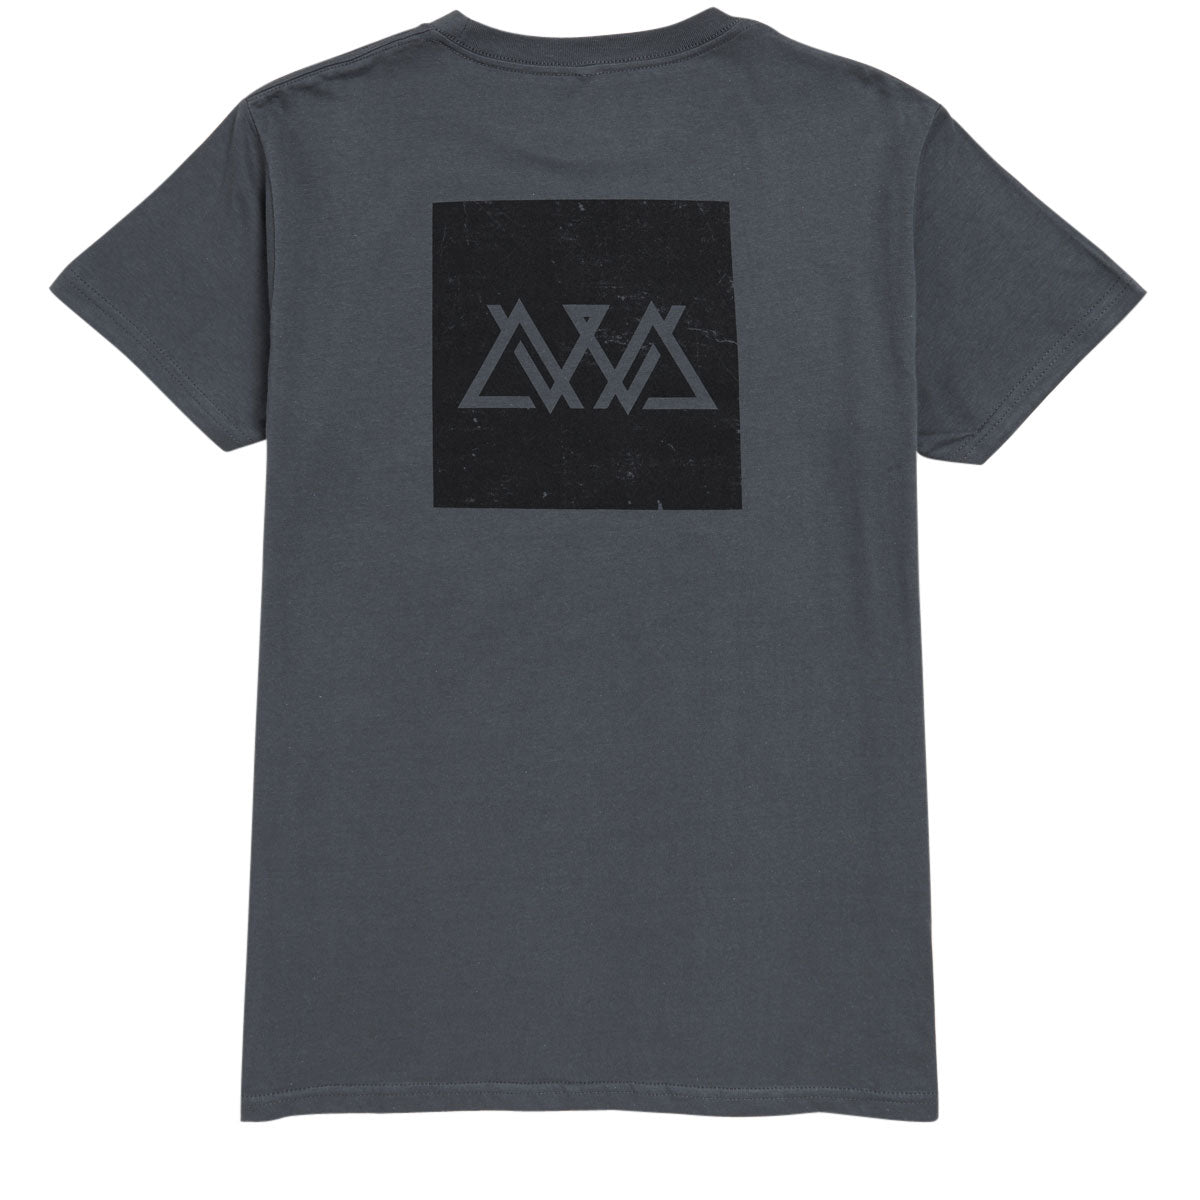 AVVA Invader T-Shirt - Charcoal Grey image 1